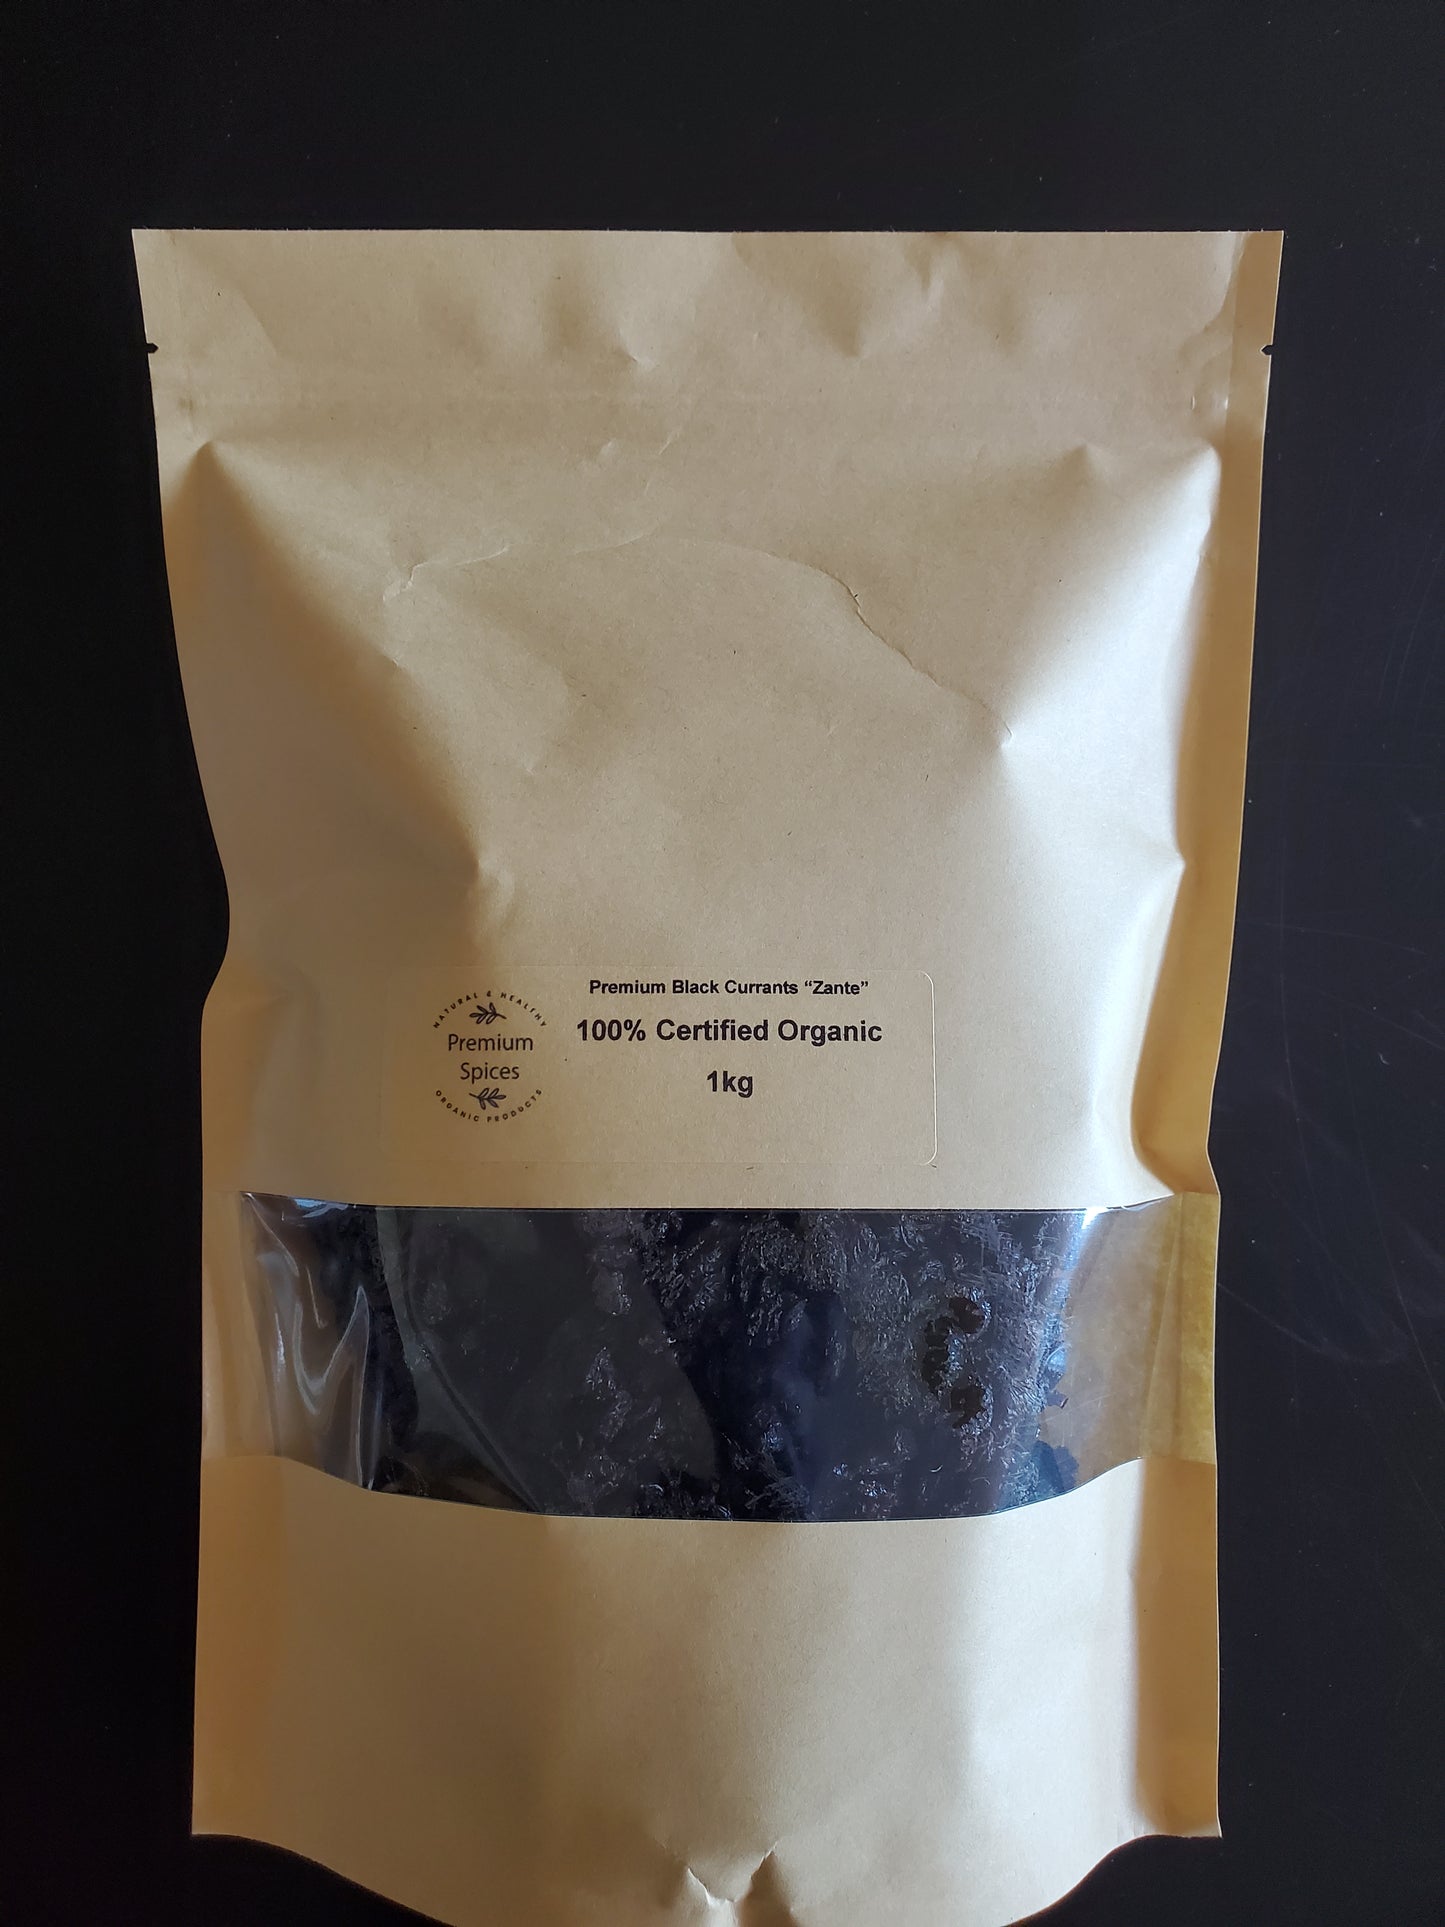 Premium Organics Black Currants "Zante", Dried 100% Certified Organic